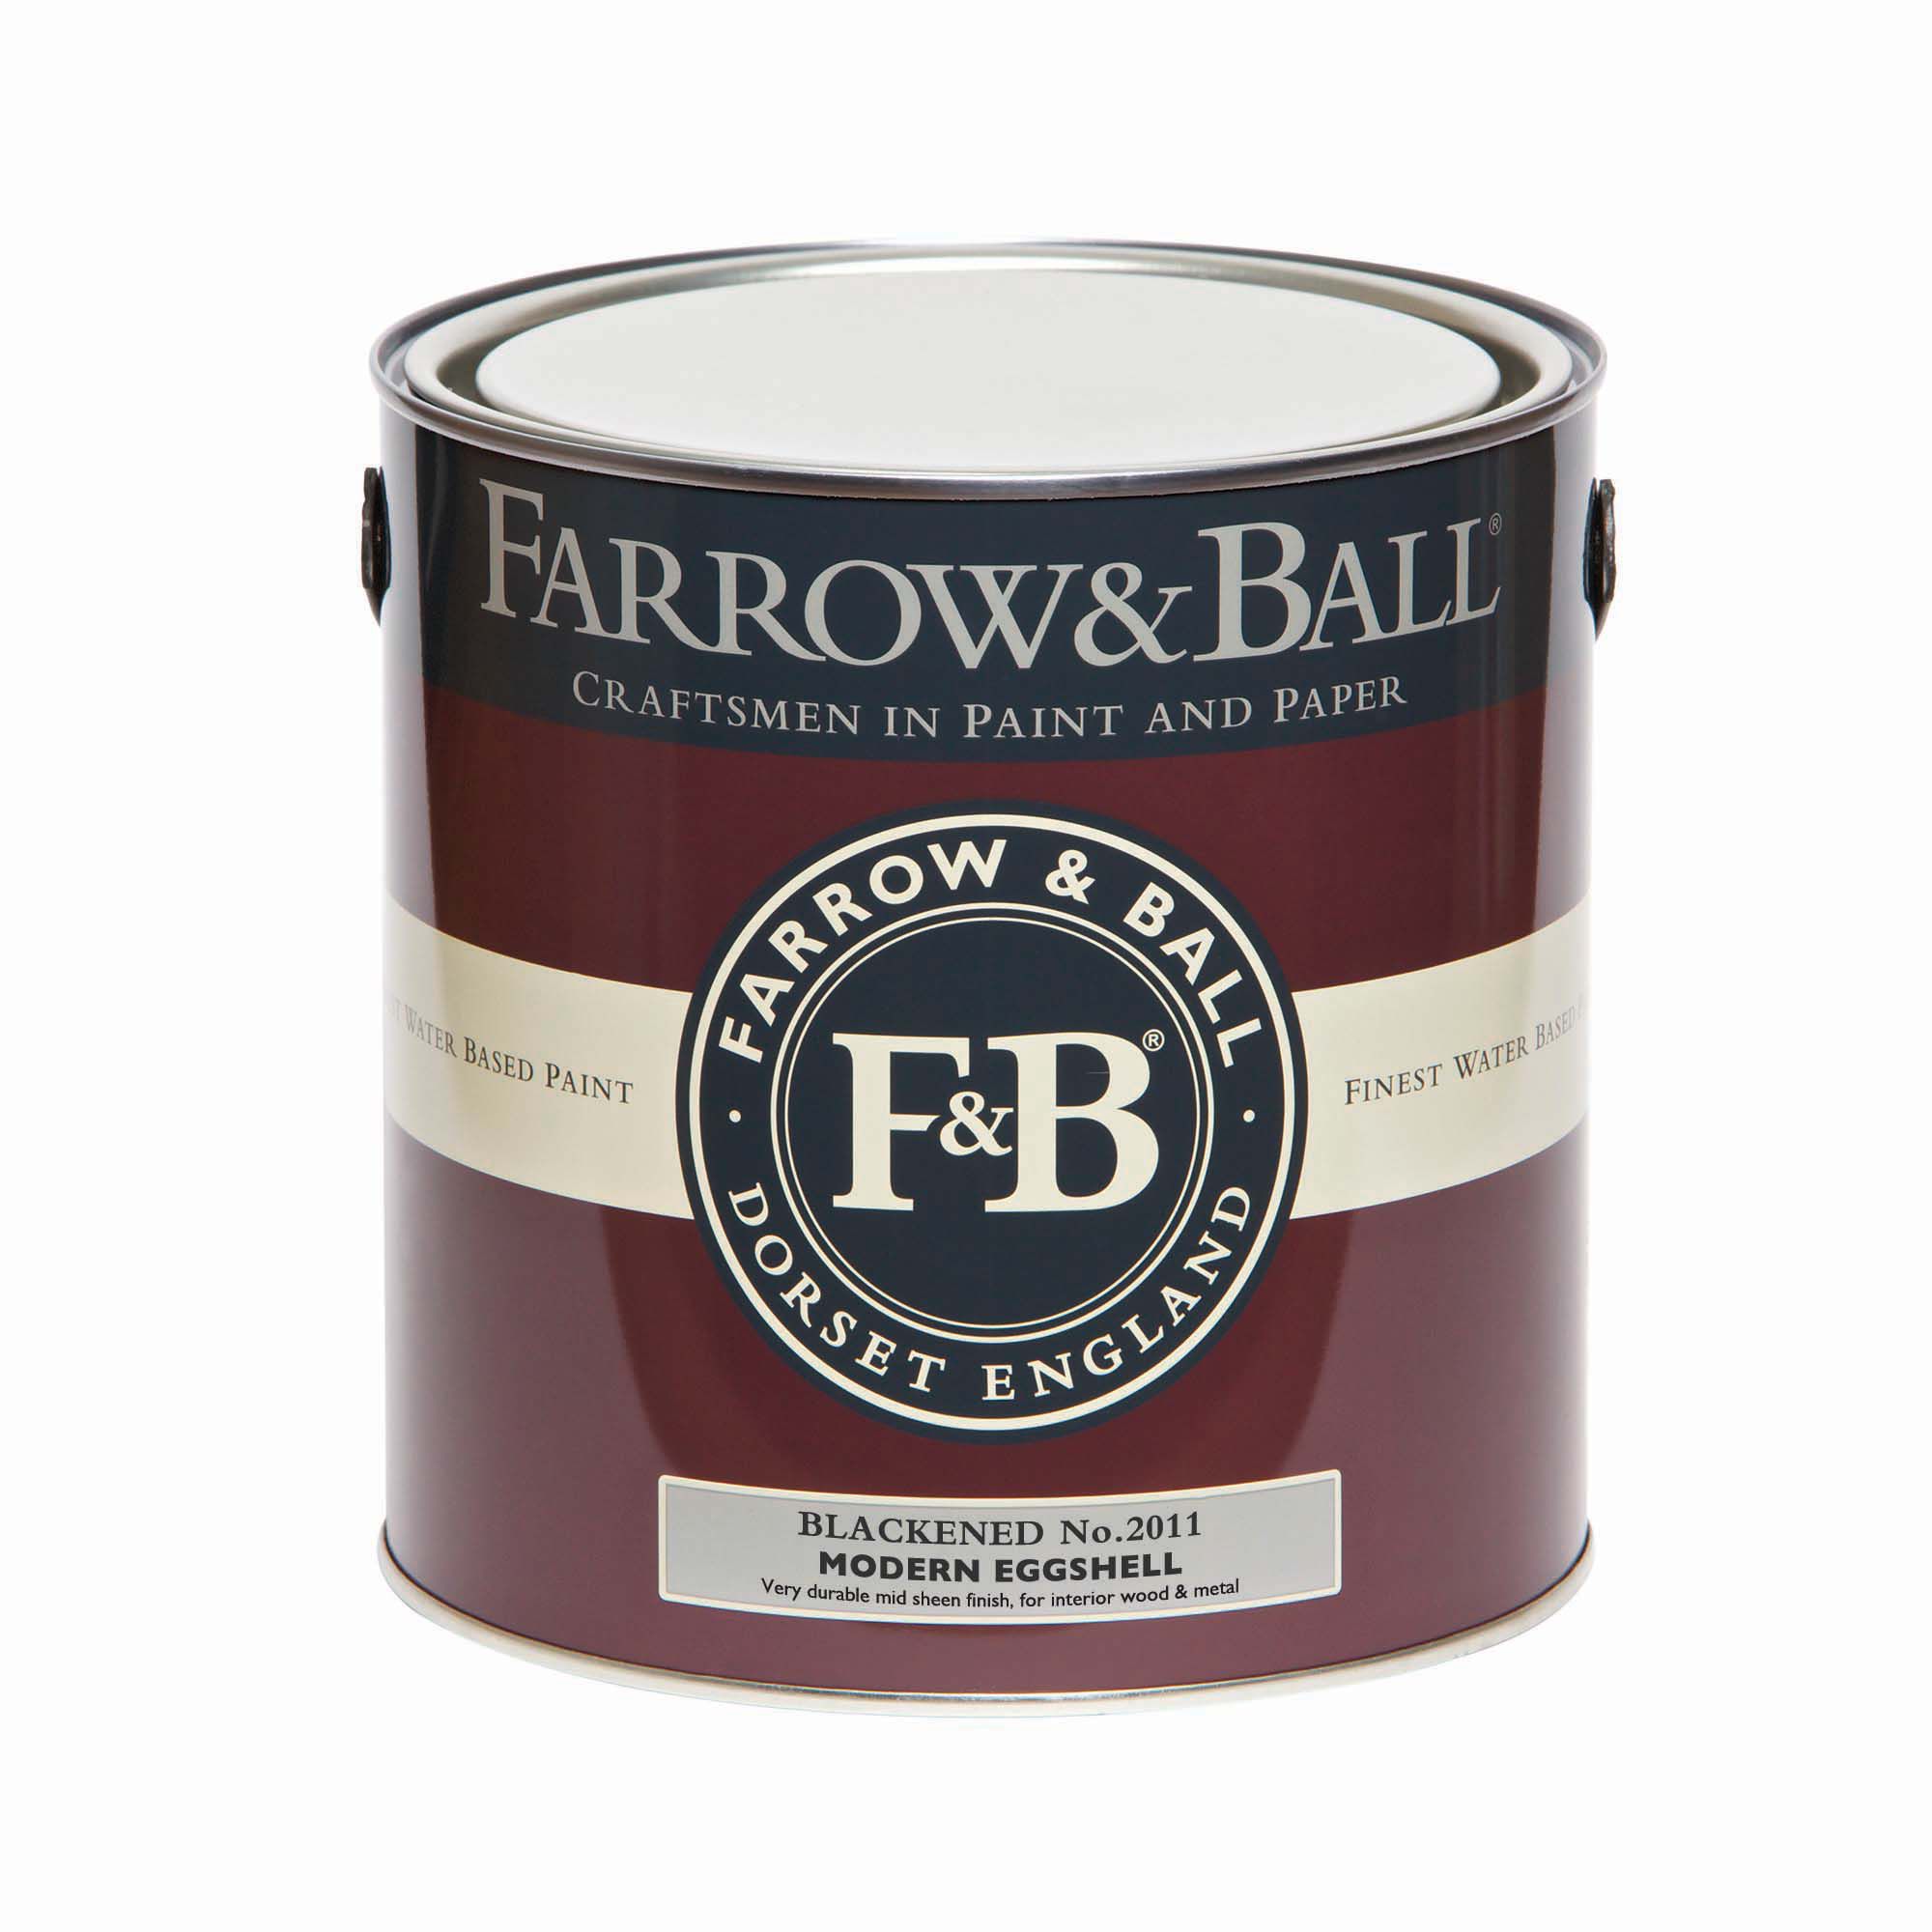 Farrow & Ball Modern Blackened No.2011 Eggshell Paint, 2.5L